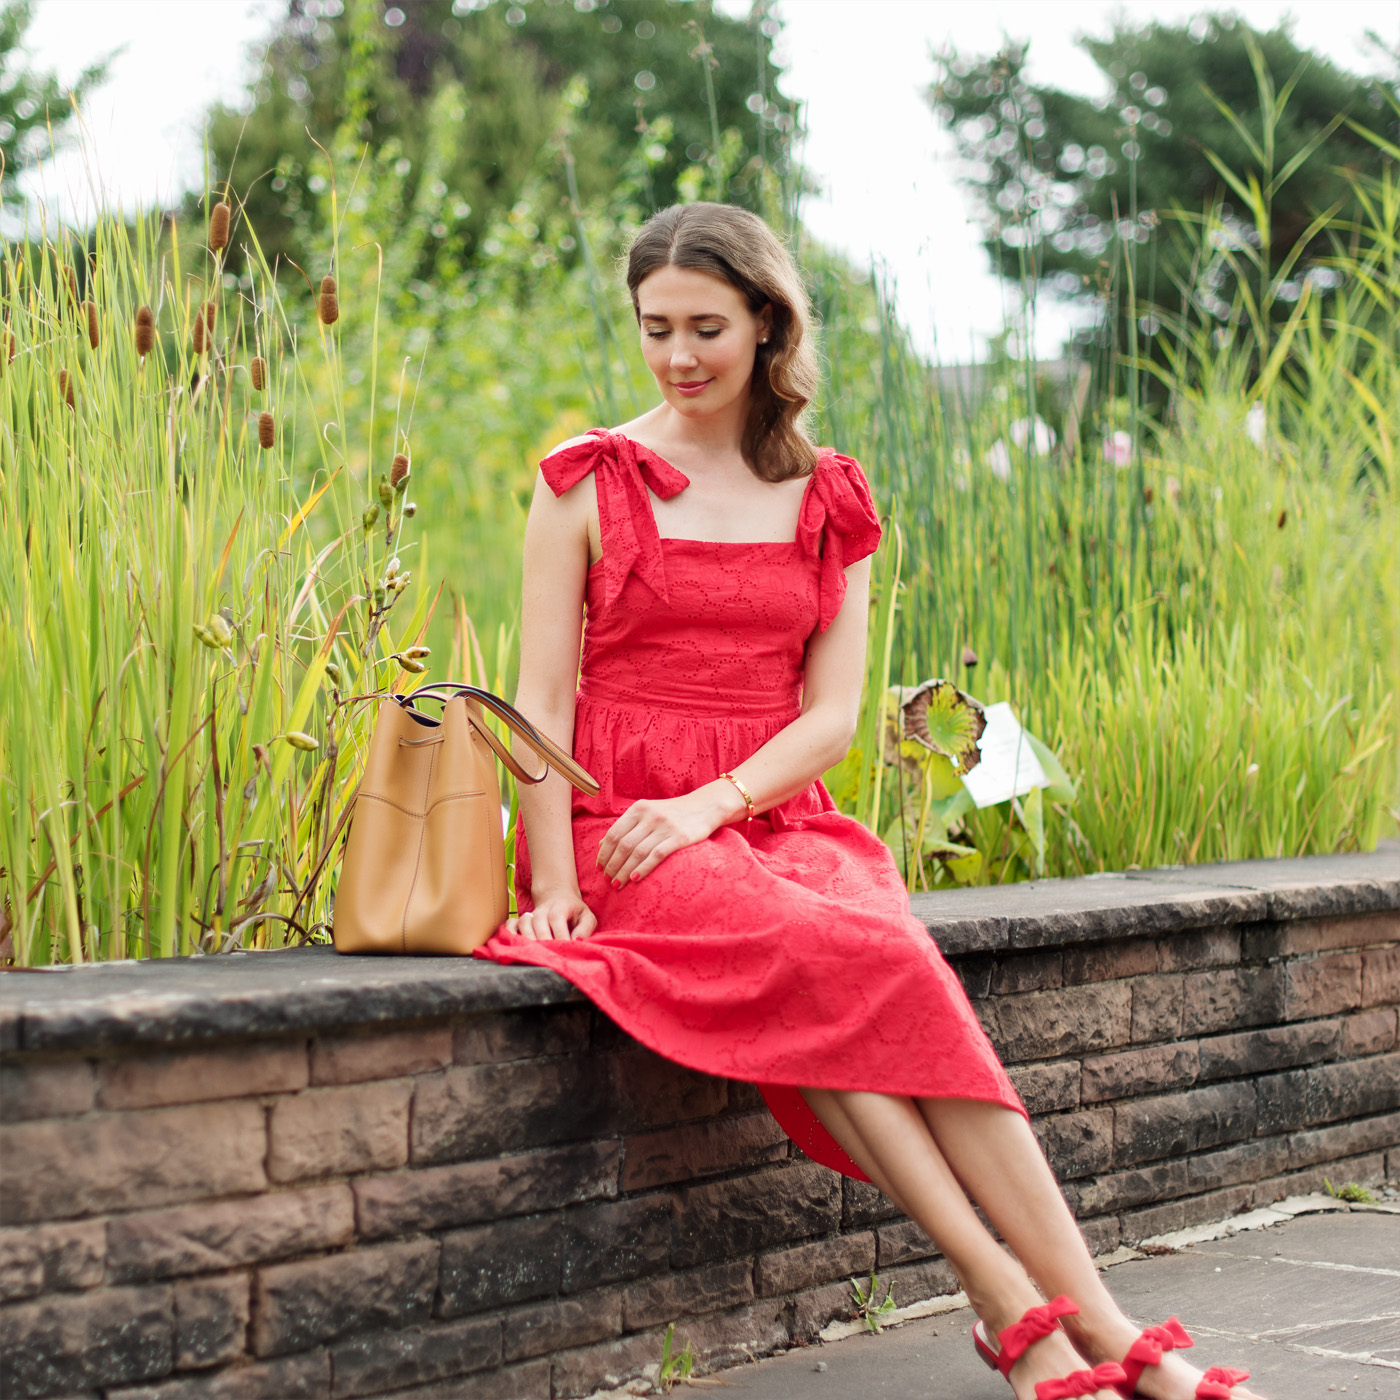 hm-red-dress-rotes-kleid-sandalen-tory-burch-bag-tasche-botanischer-garten-kit-fashionblog